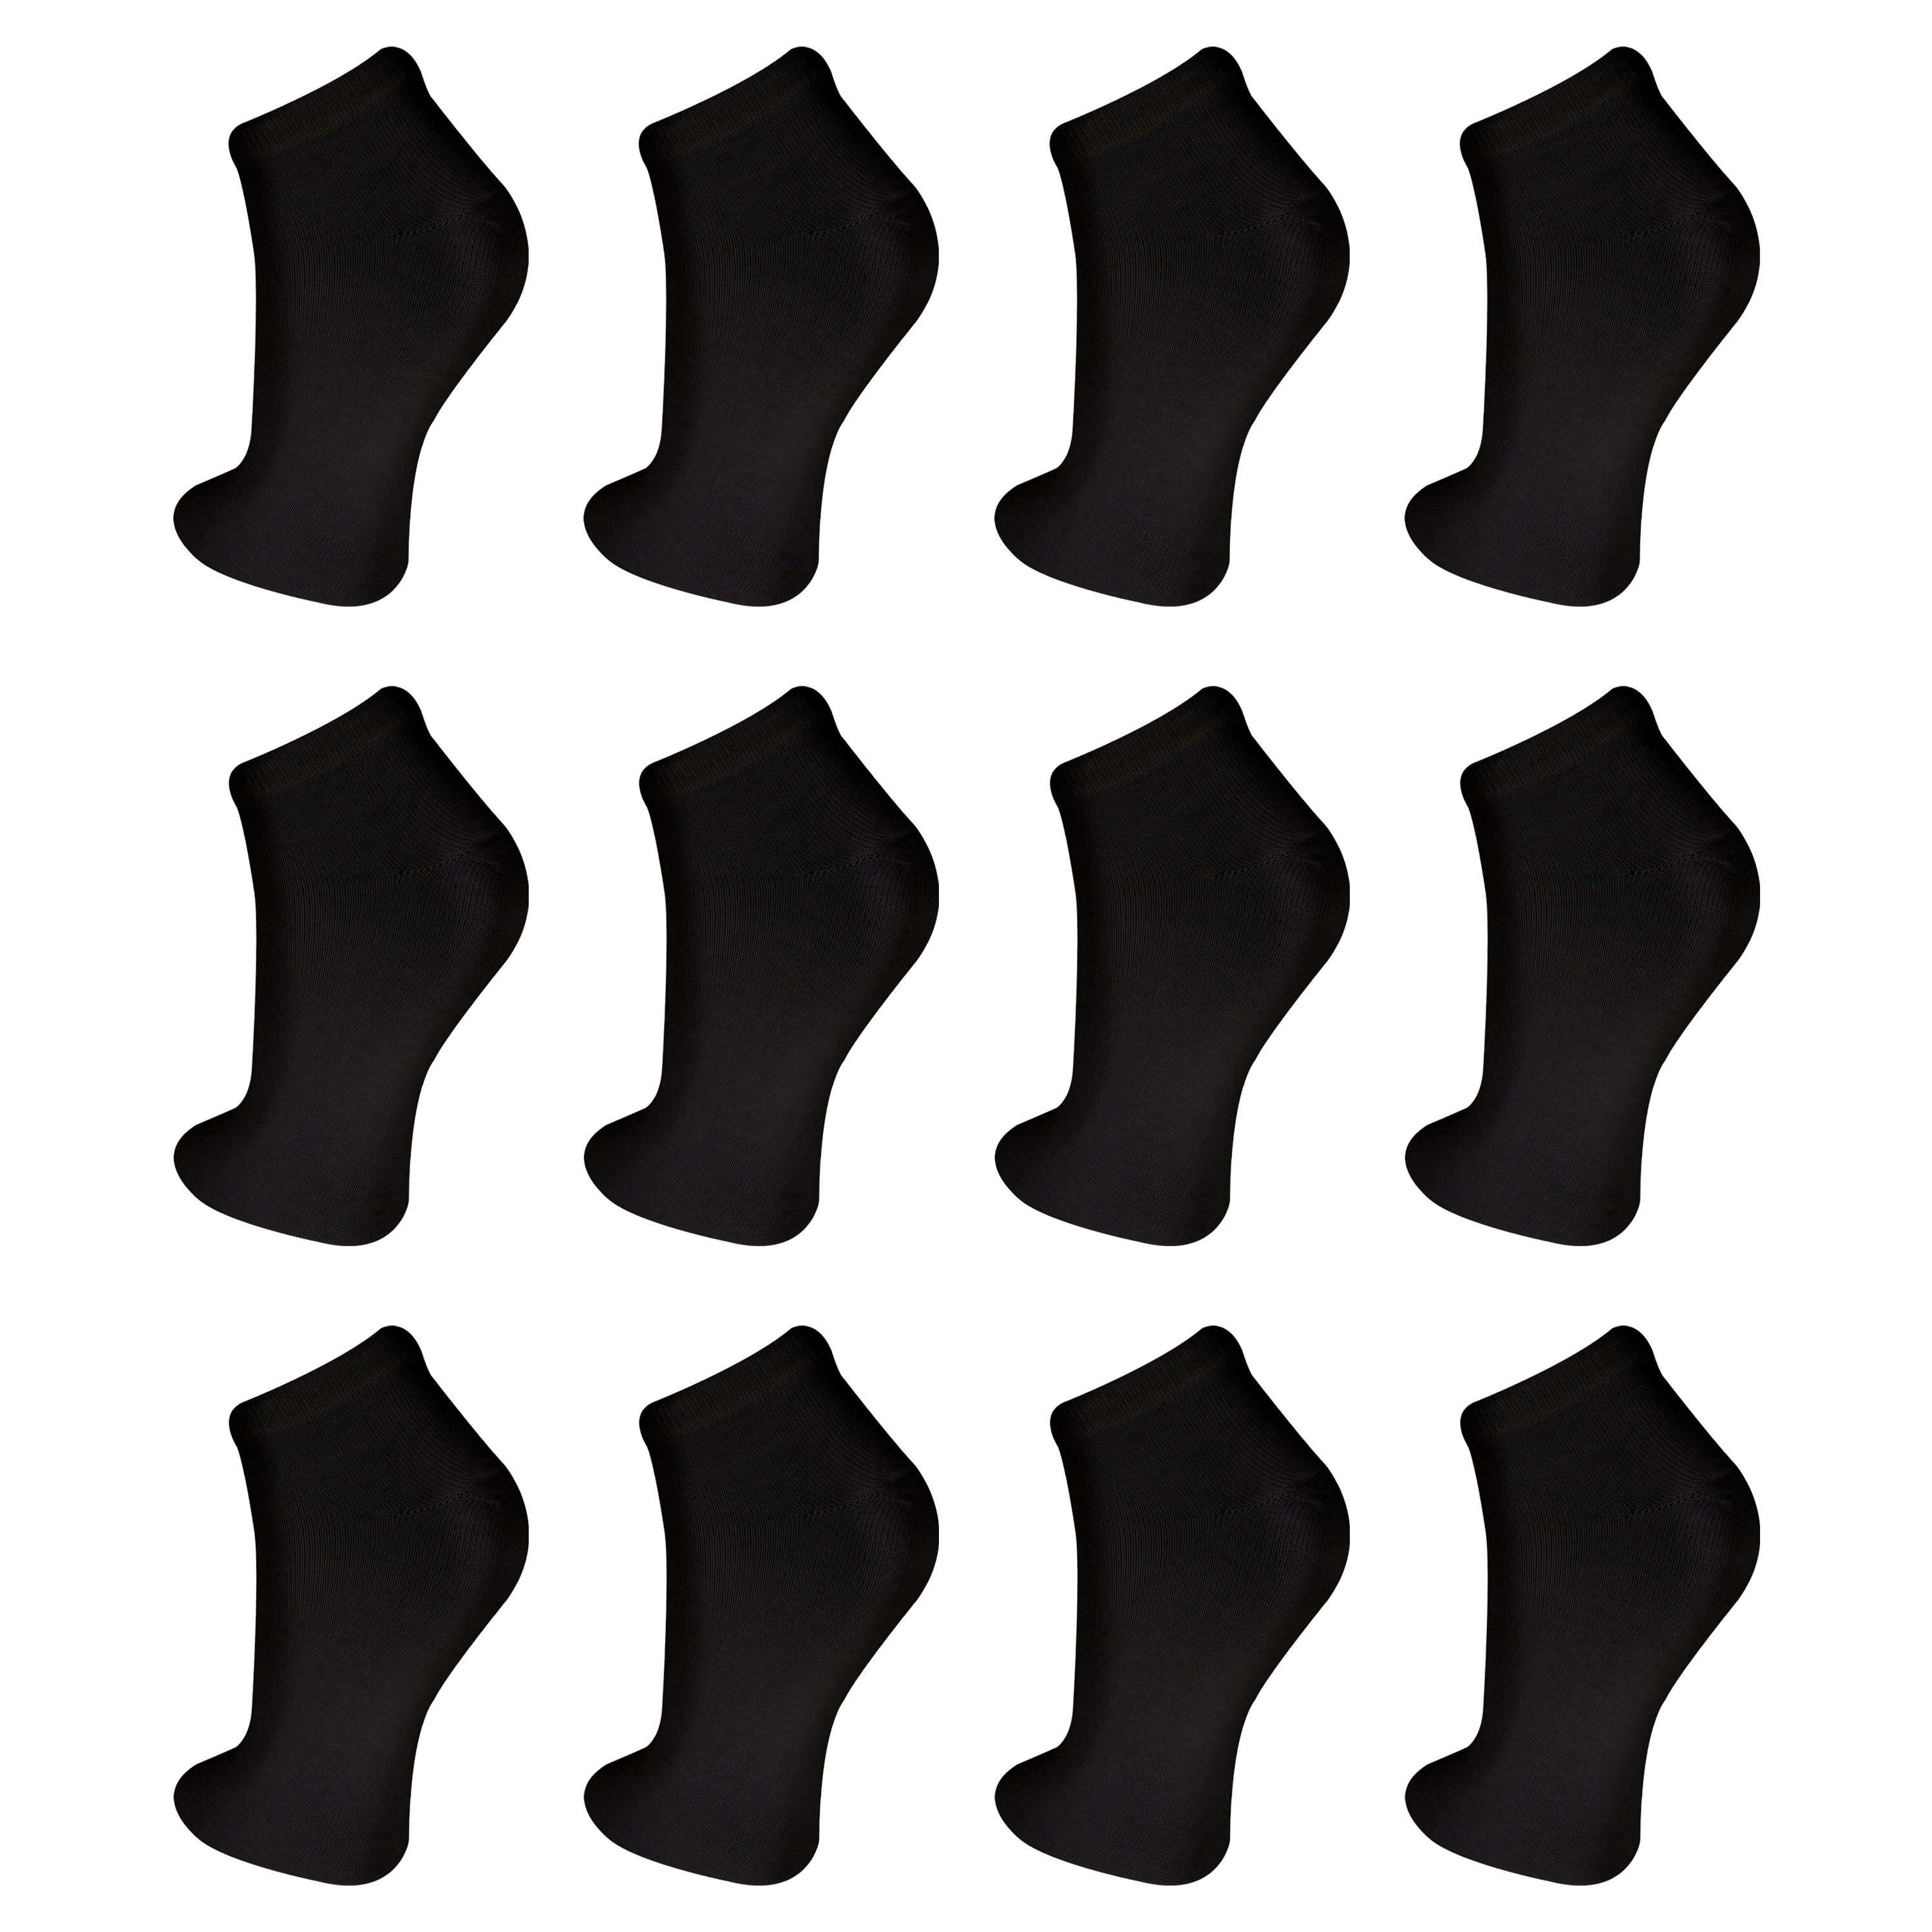 Damen Socken Weiß Schwarz 12, 12-Paar) & Sneaker Paar 36 24, Füßlinge (Packung, Robust Sport Langlebig Quarter Kurzsocken Grau Sneakersocken Baumwolle Herren TEXEMP